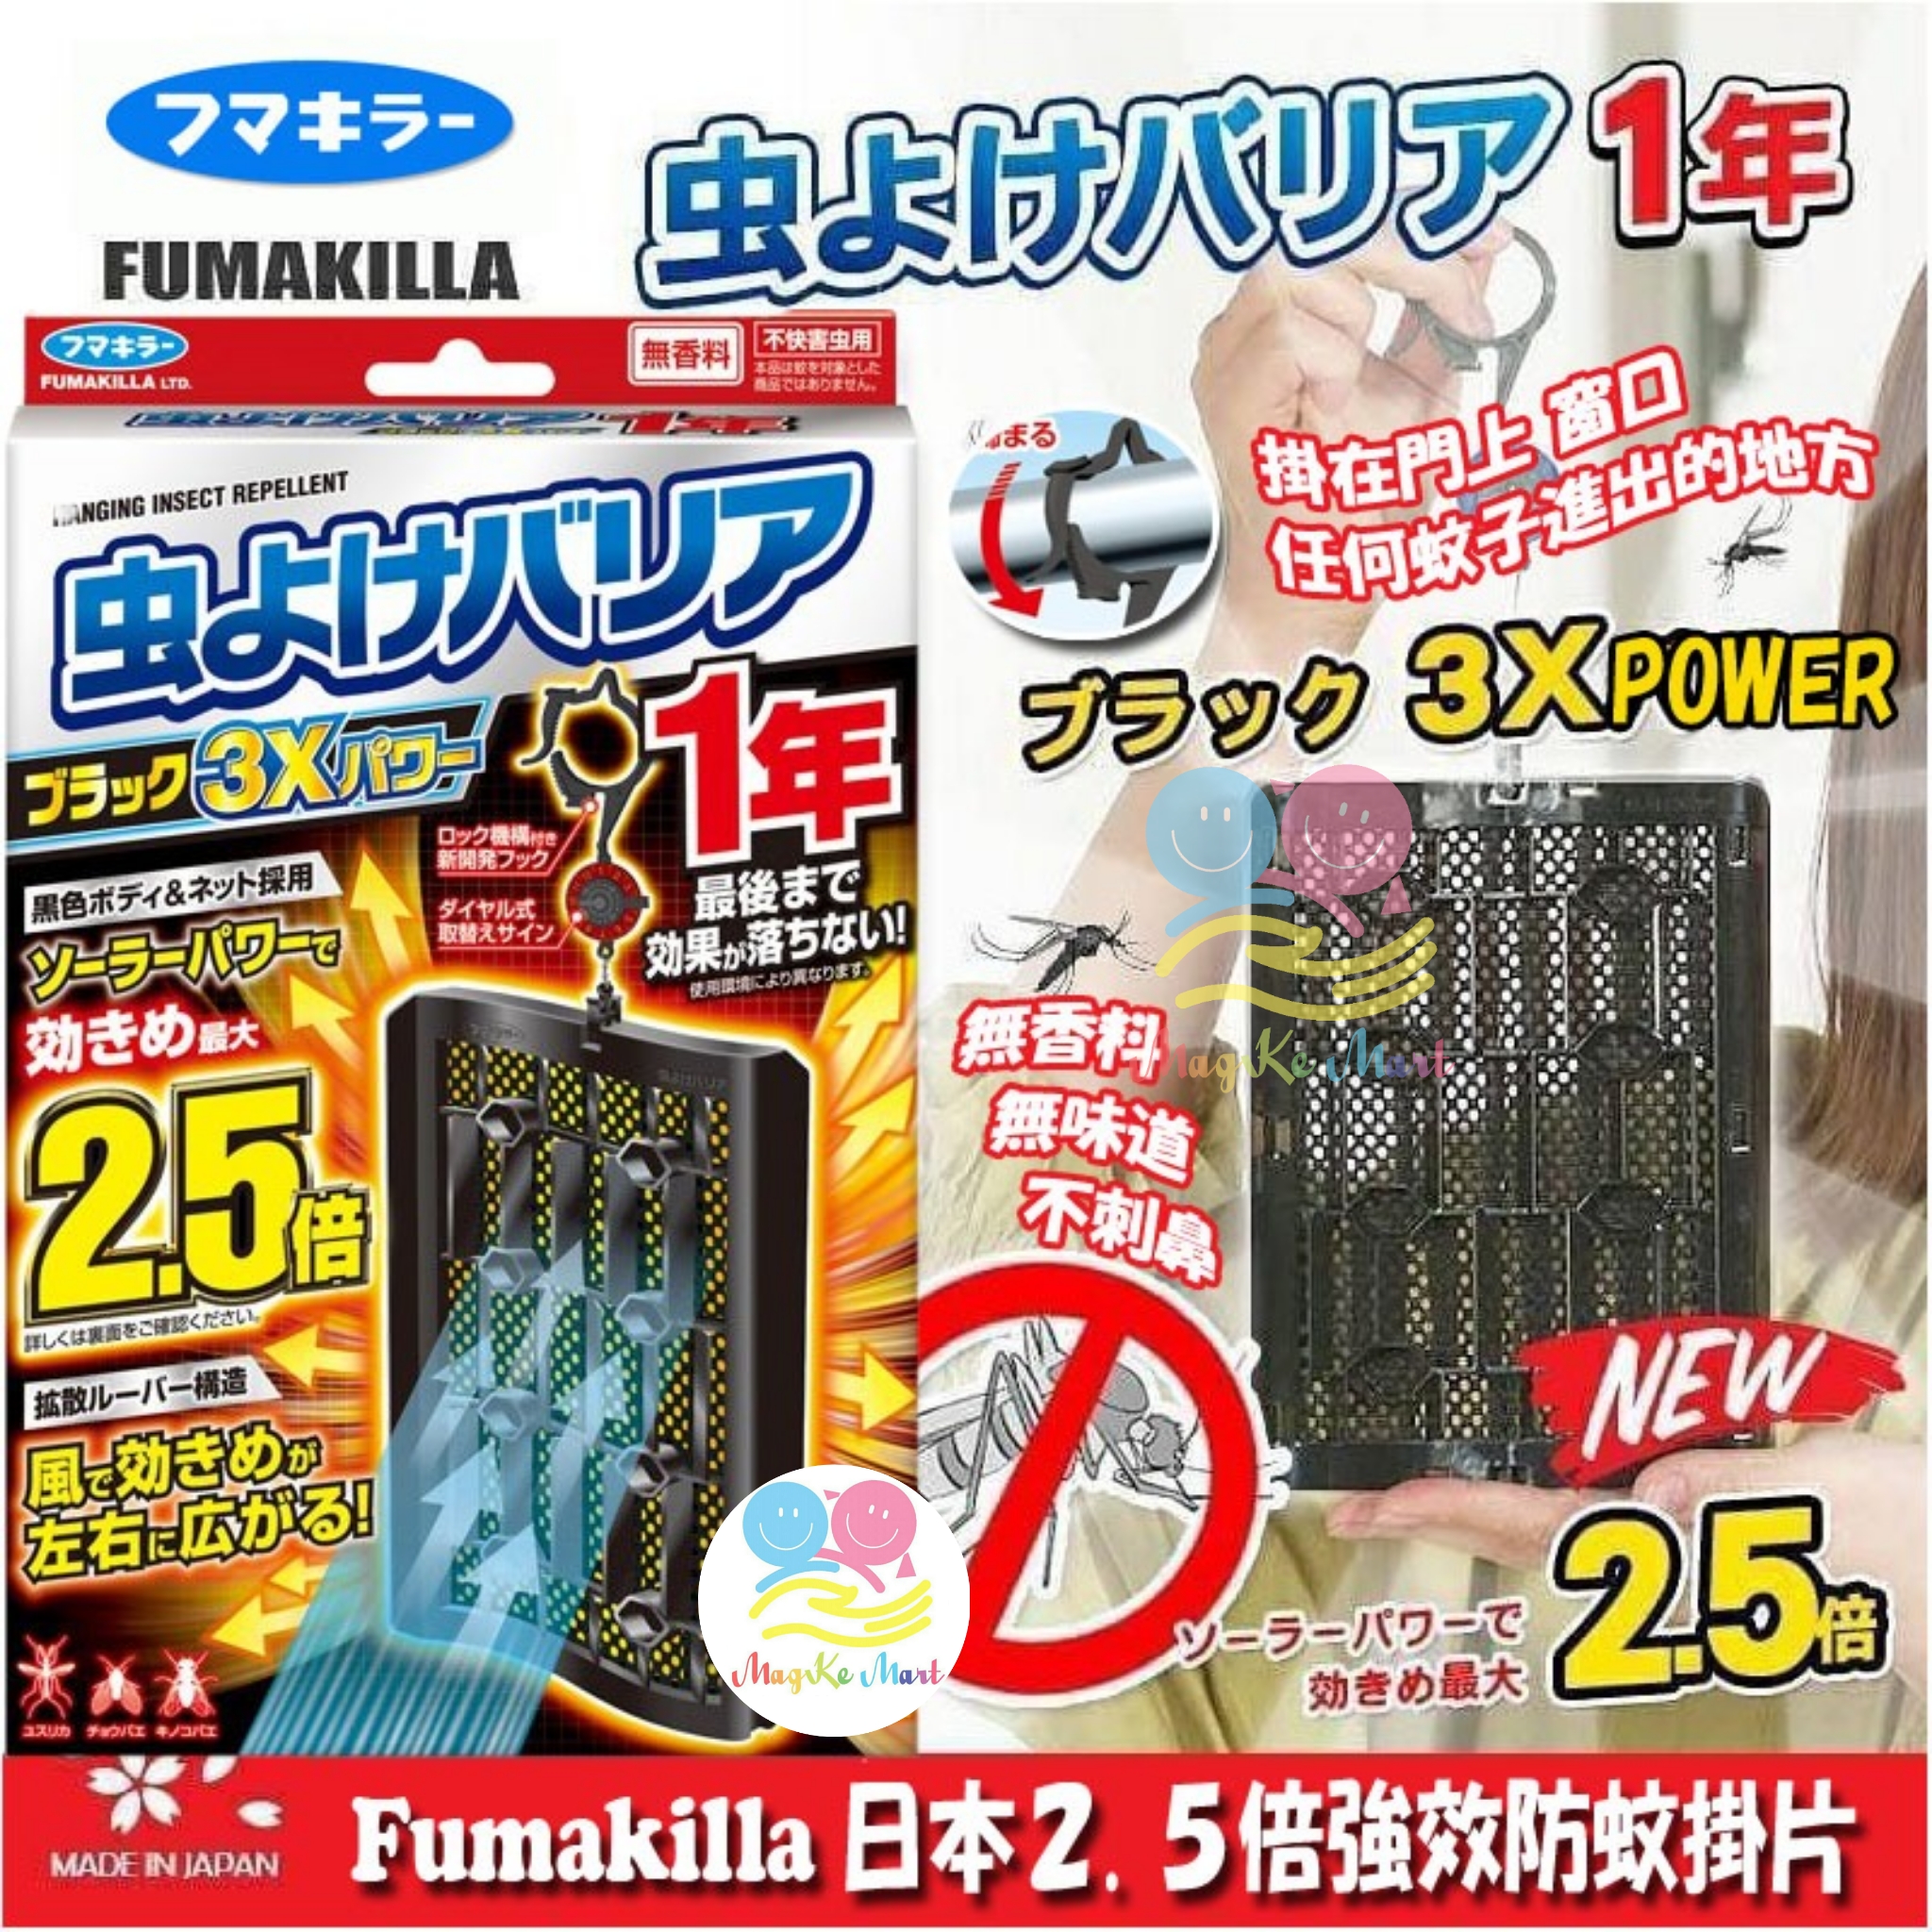 日本 Fumakilla 2.5倍強效防蚊掛片